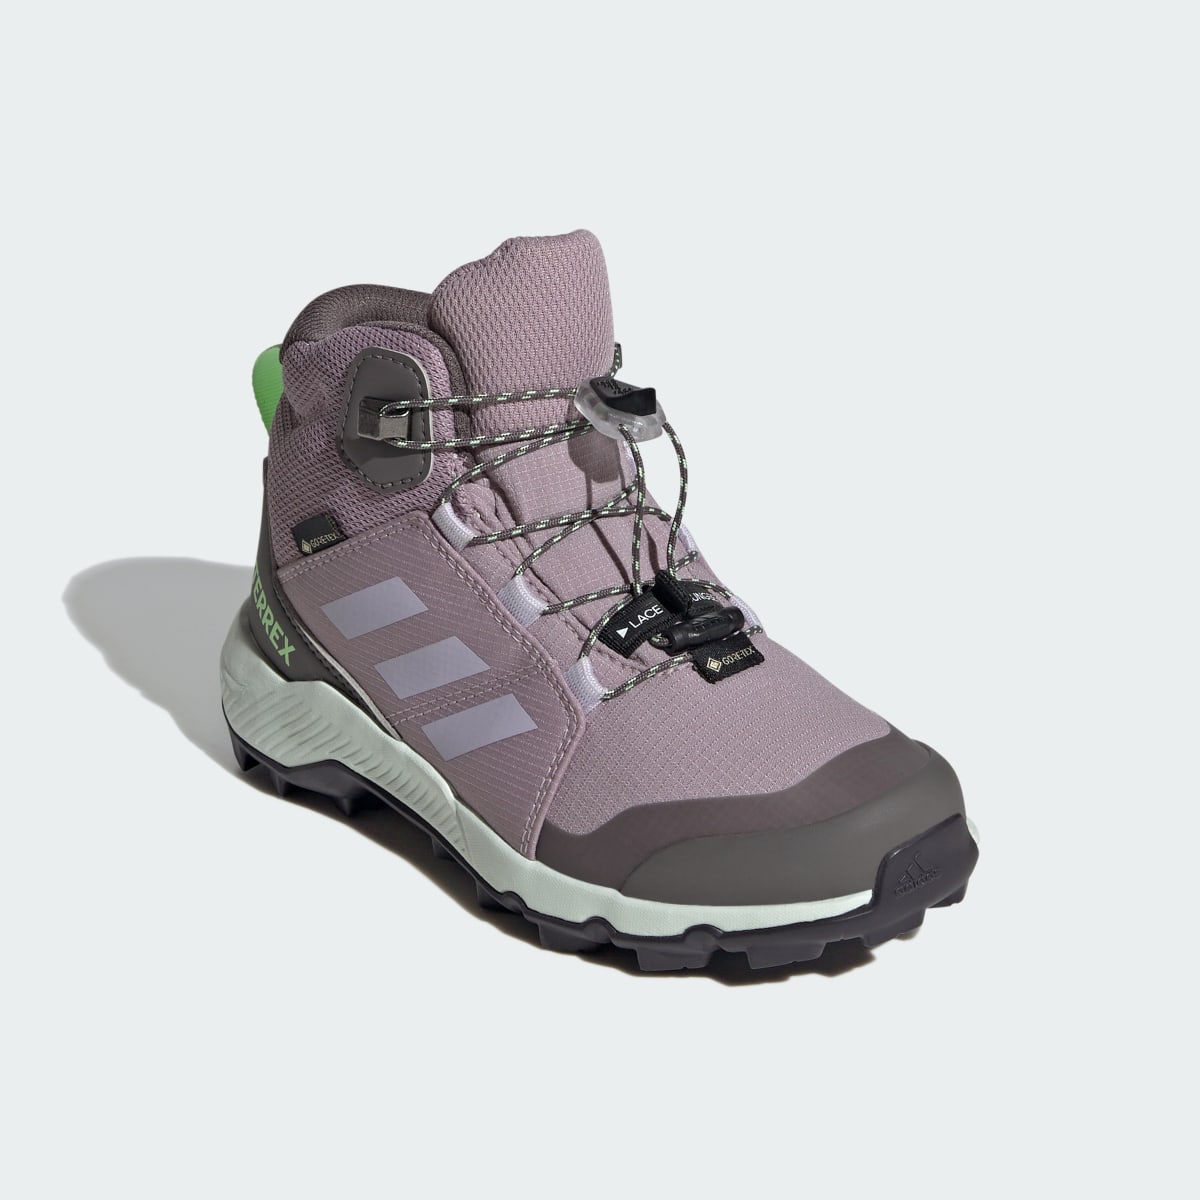 Adidas Chaussure de randonnée Organizer Mid GORE-TEX. 5